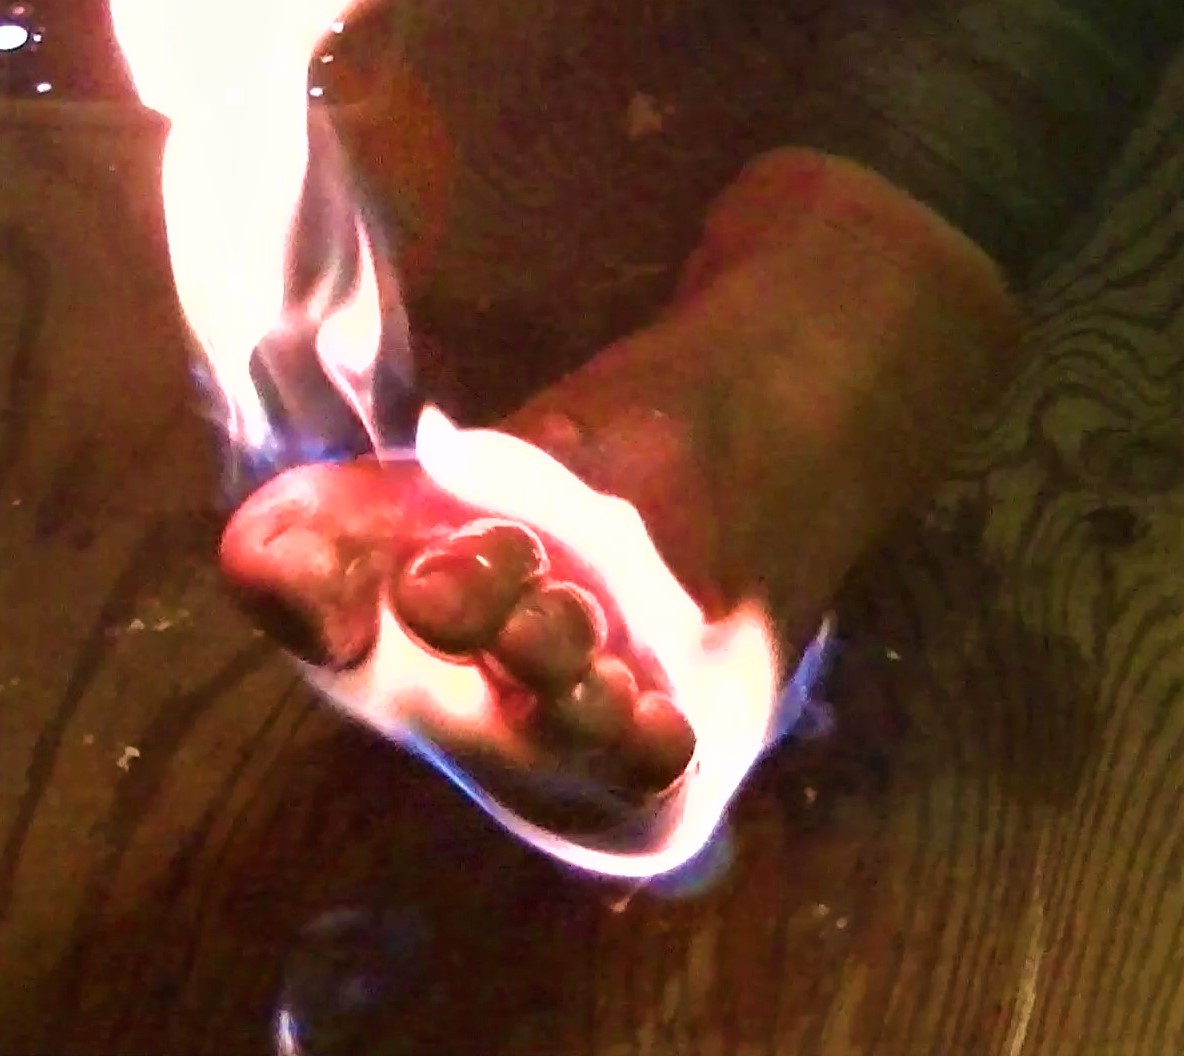 Deep burn foot fire torture - video 7 - ThisVid.com